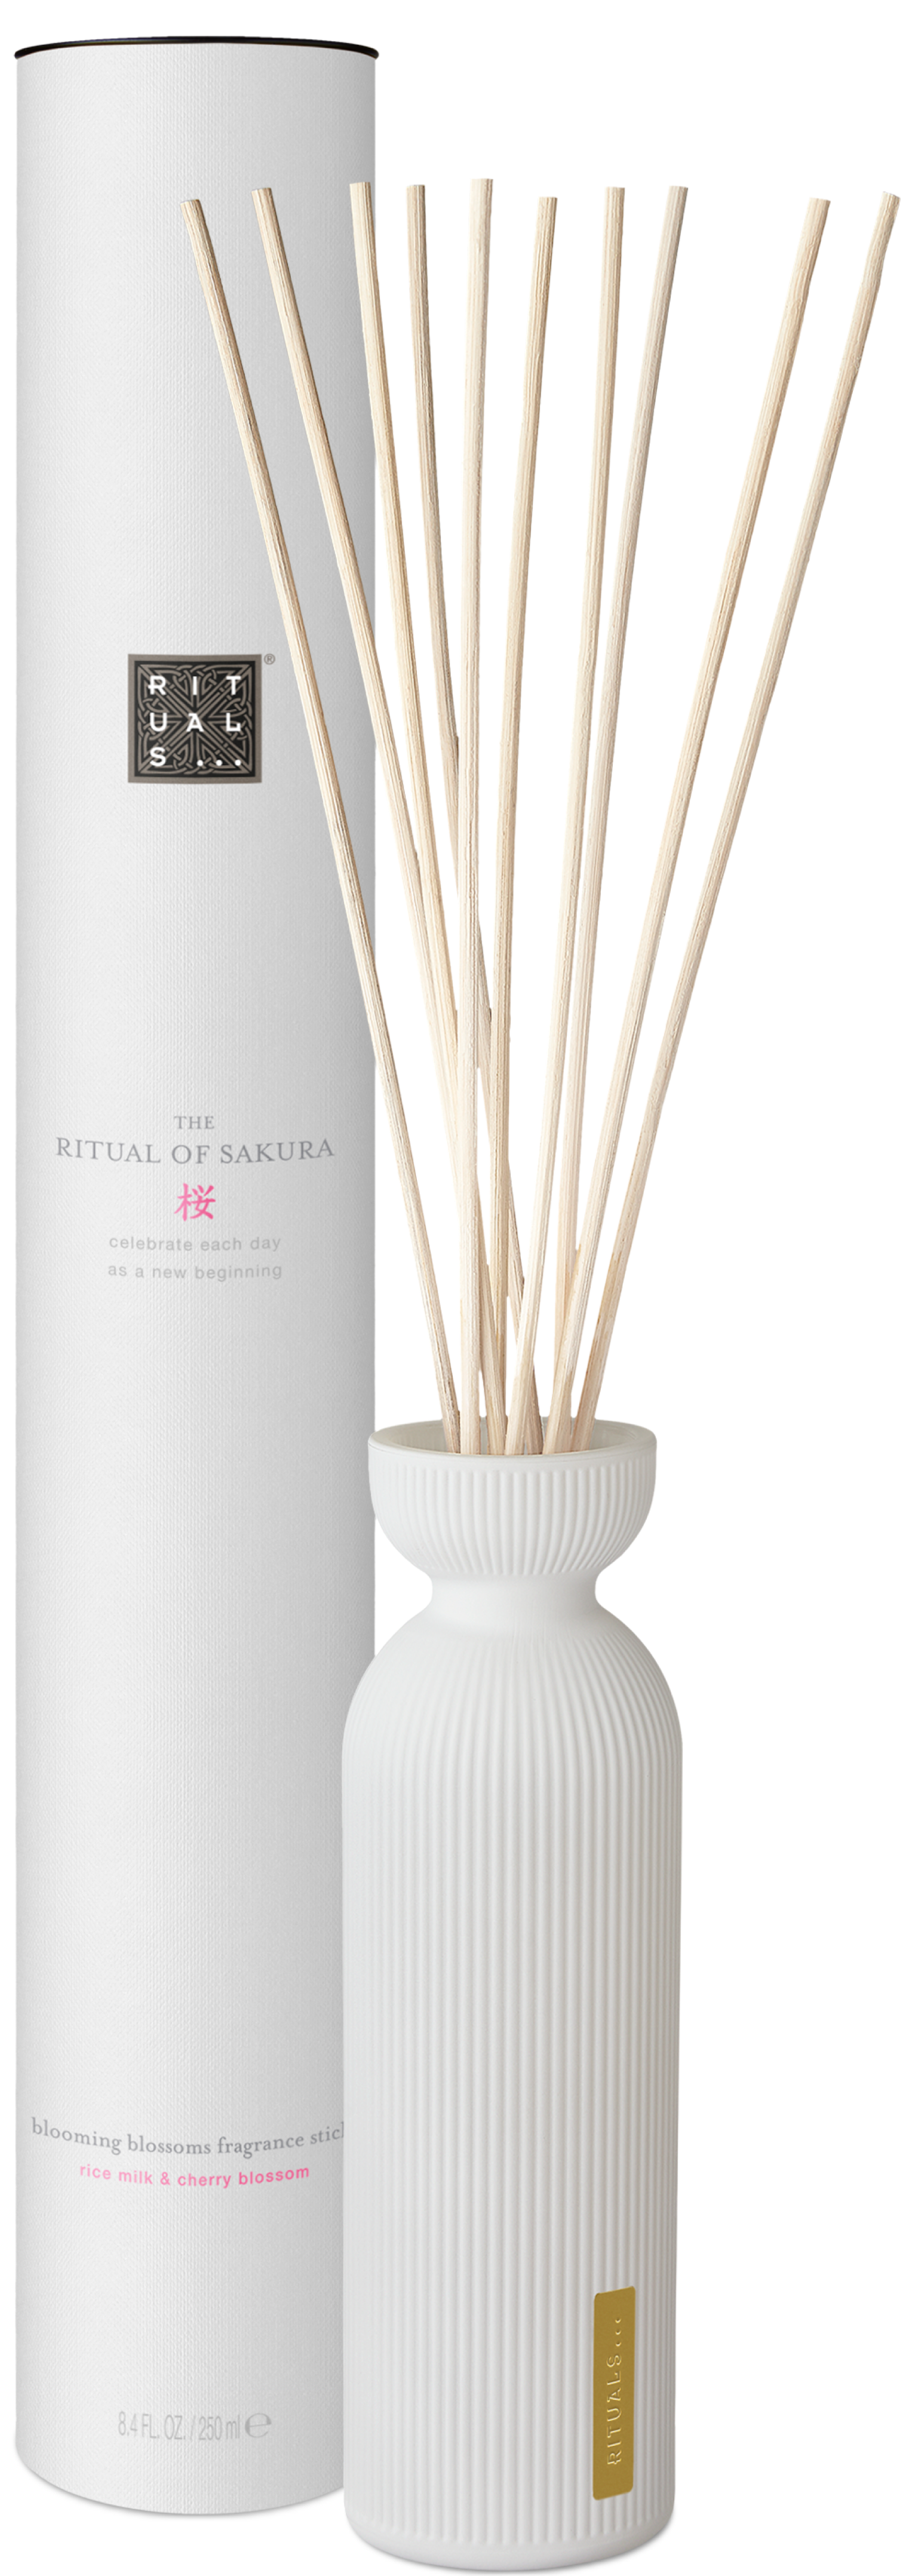 Rituals The Ritual of Karma Refill for Fragrance Sticks